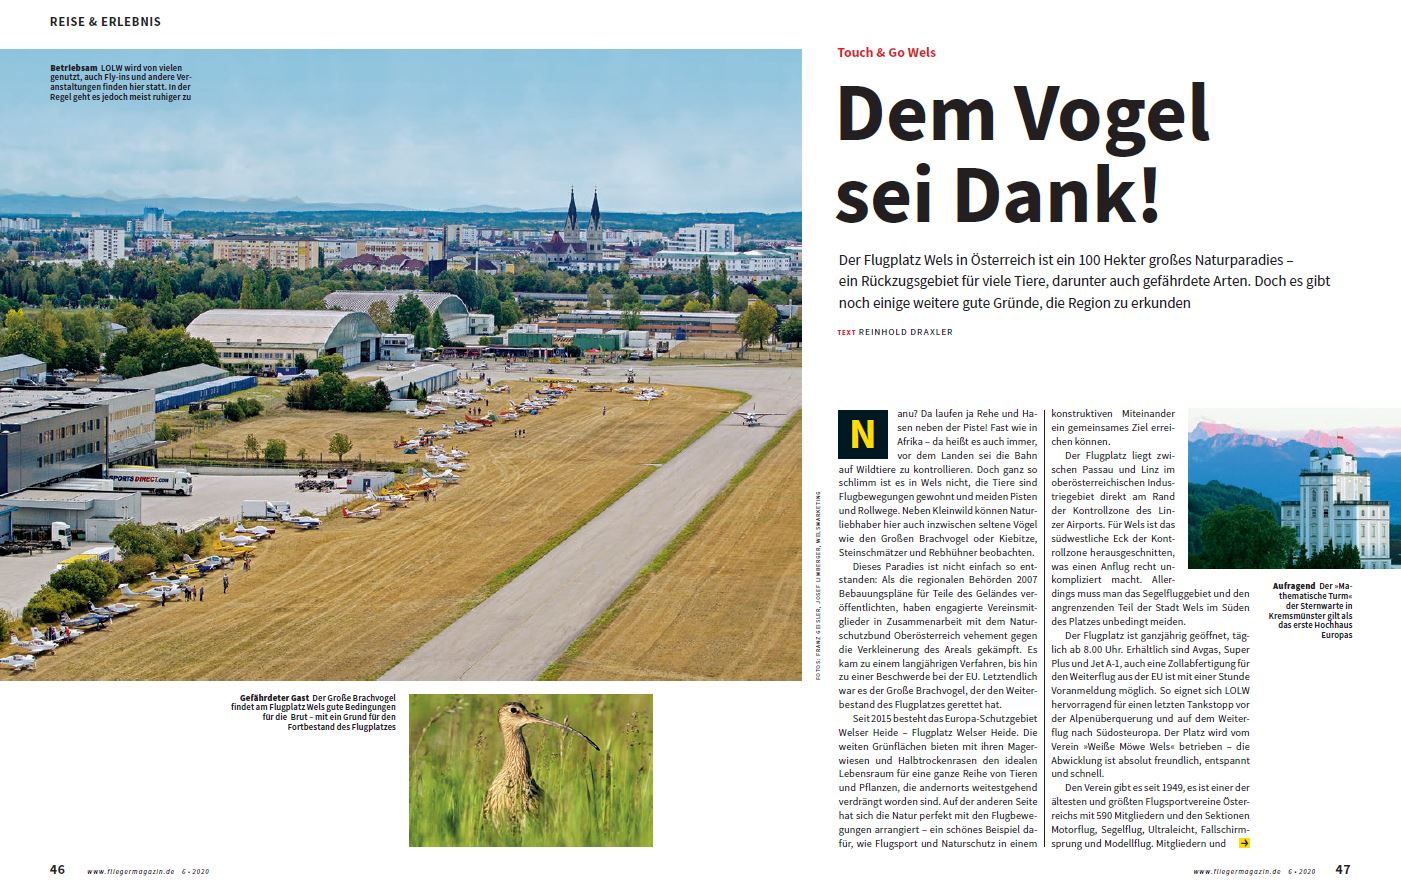 Fliegermagazin - Touch & Go Wels - Dem Vogel sei Dank!